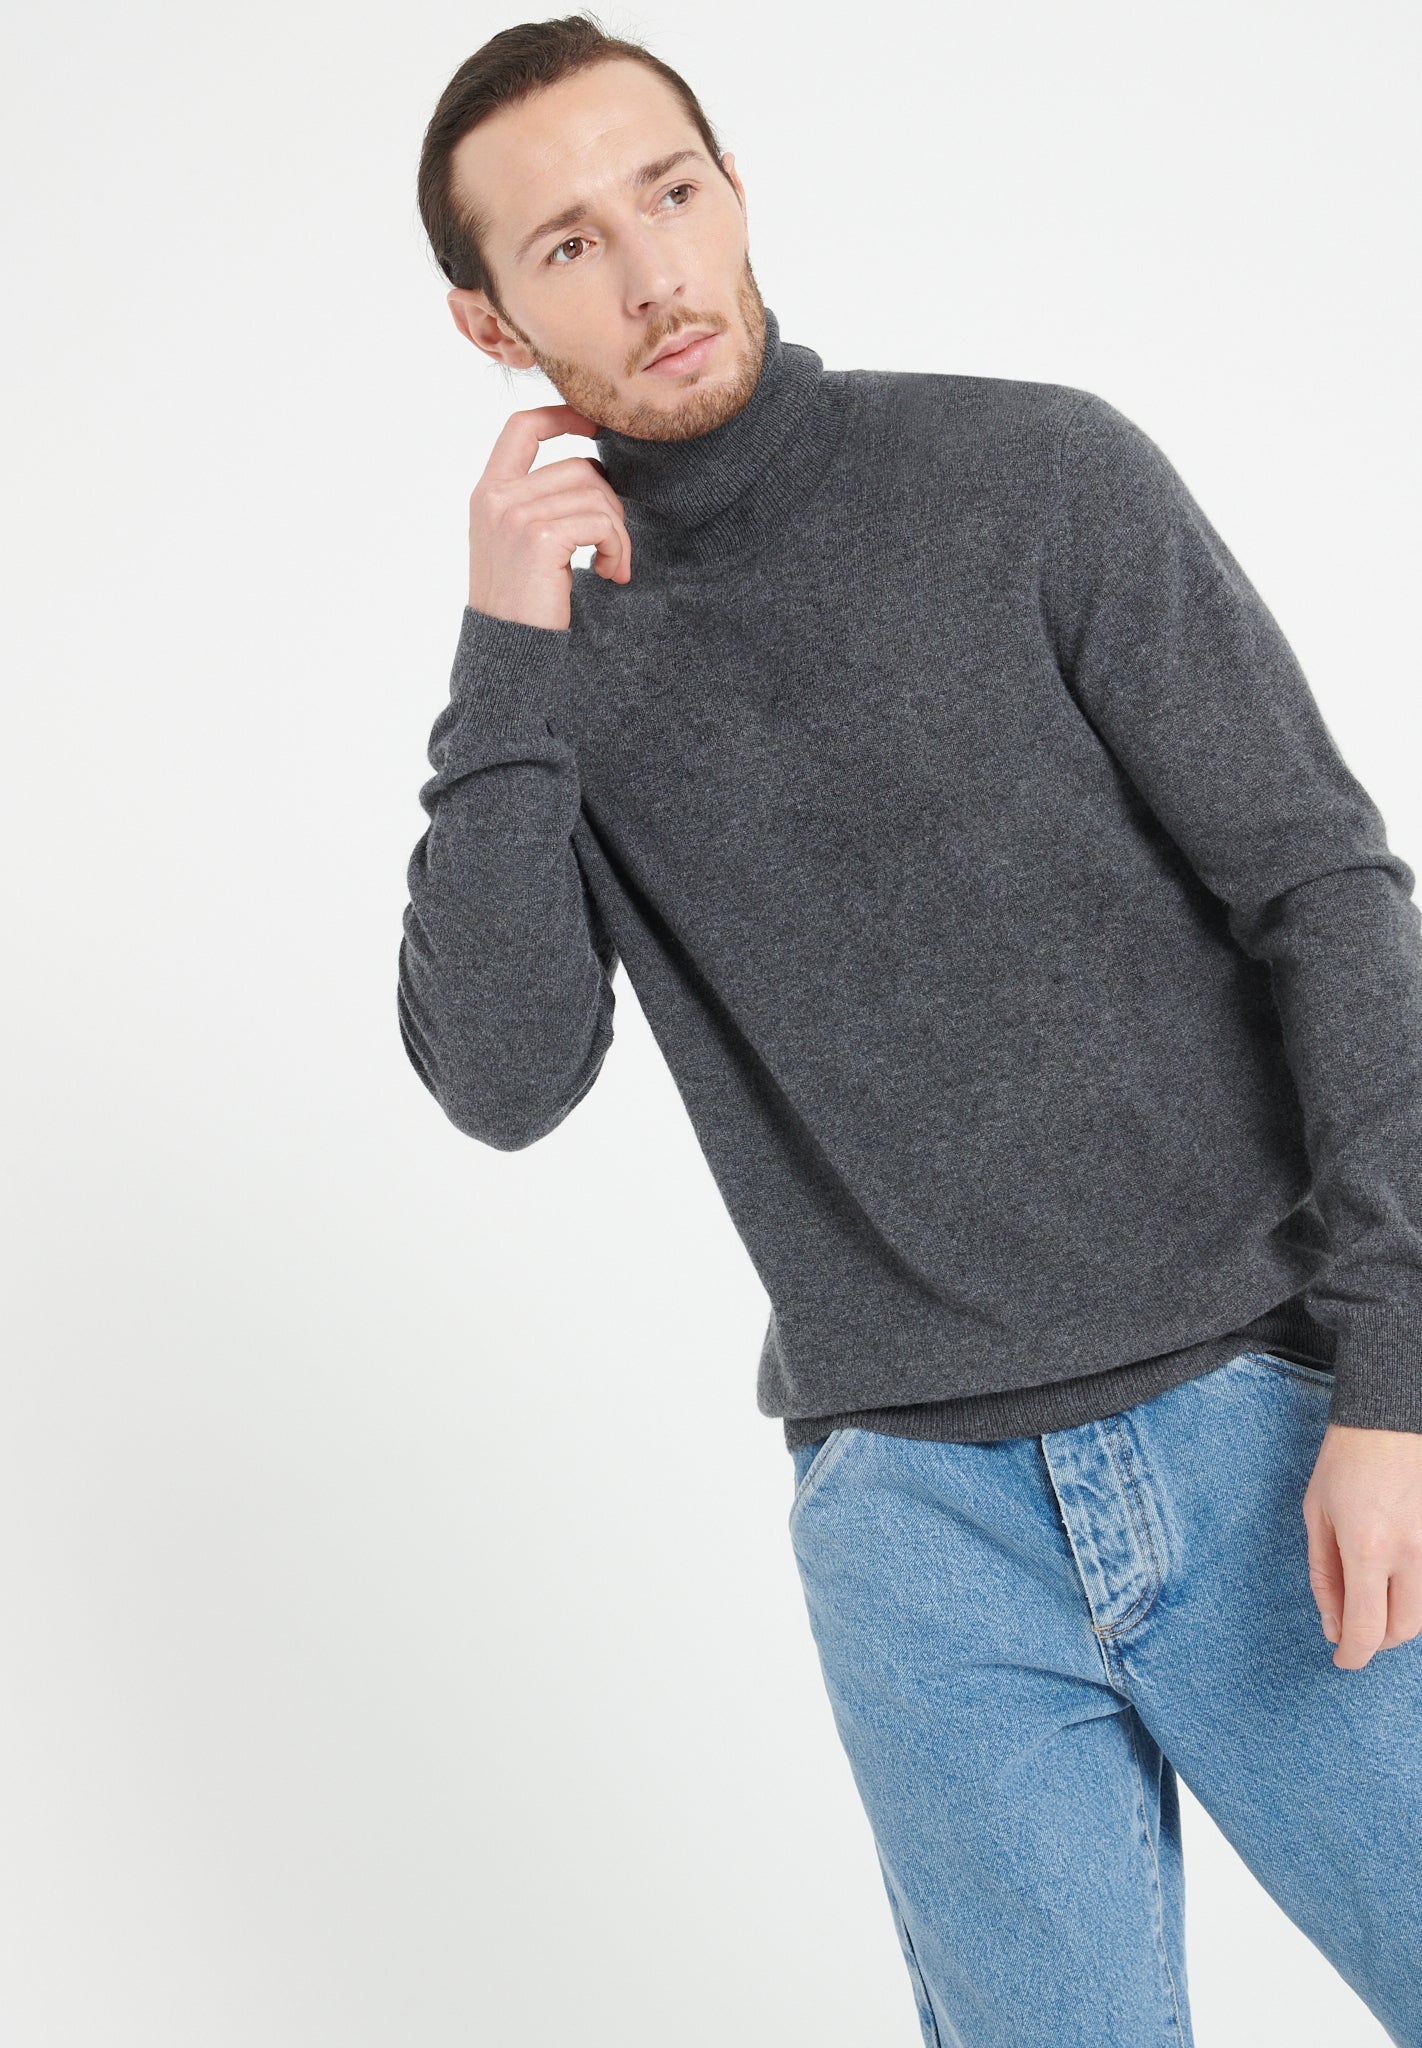 Pure Cashmere 2 Ply Turtleneck Sweater (Luke 3)